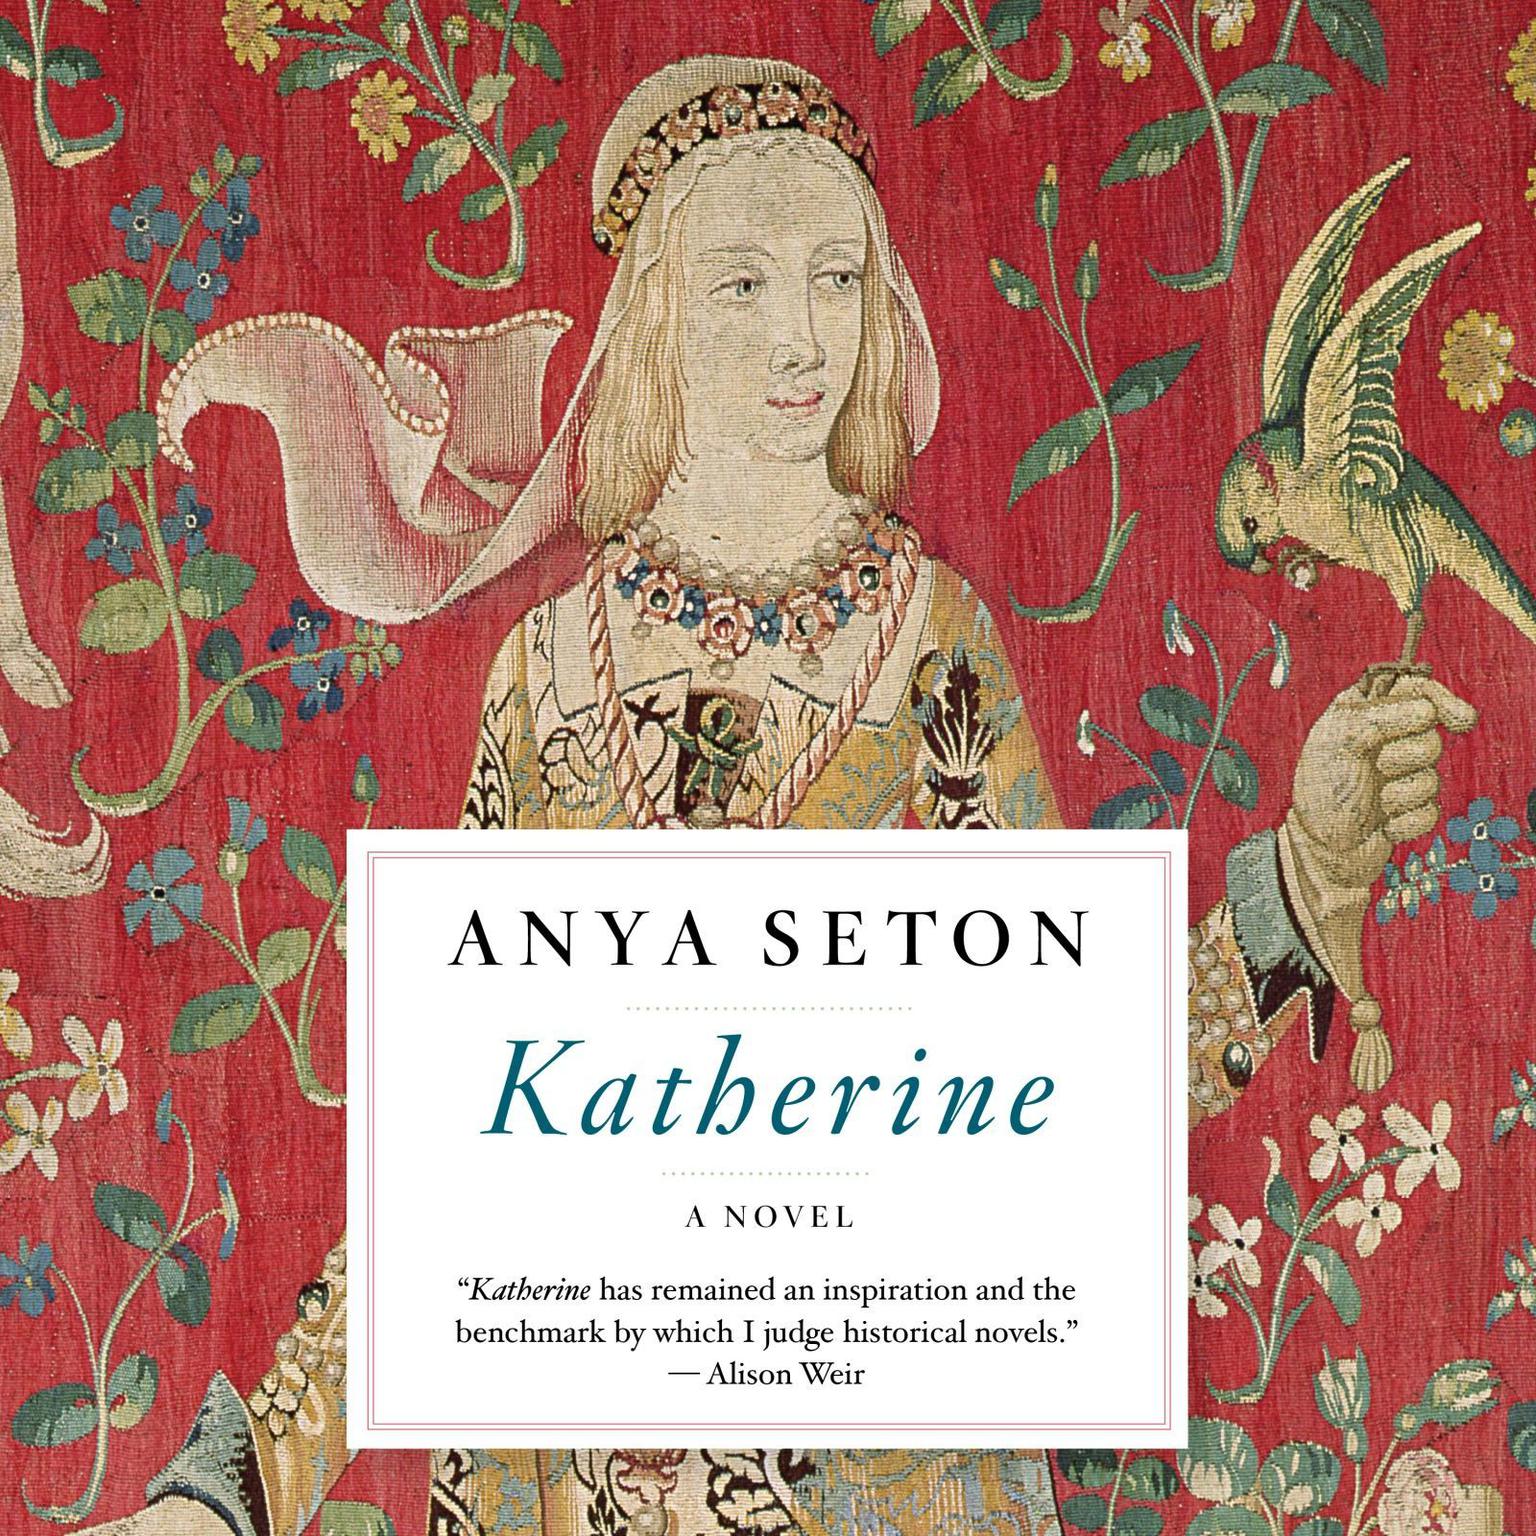 Katherine: A Novel Audiobook, by Anya Seton